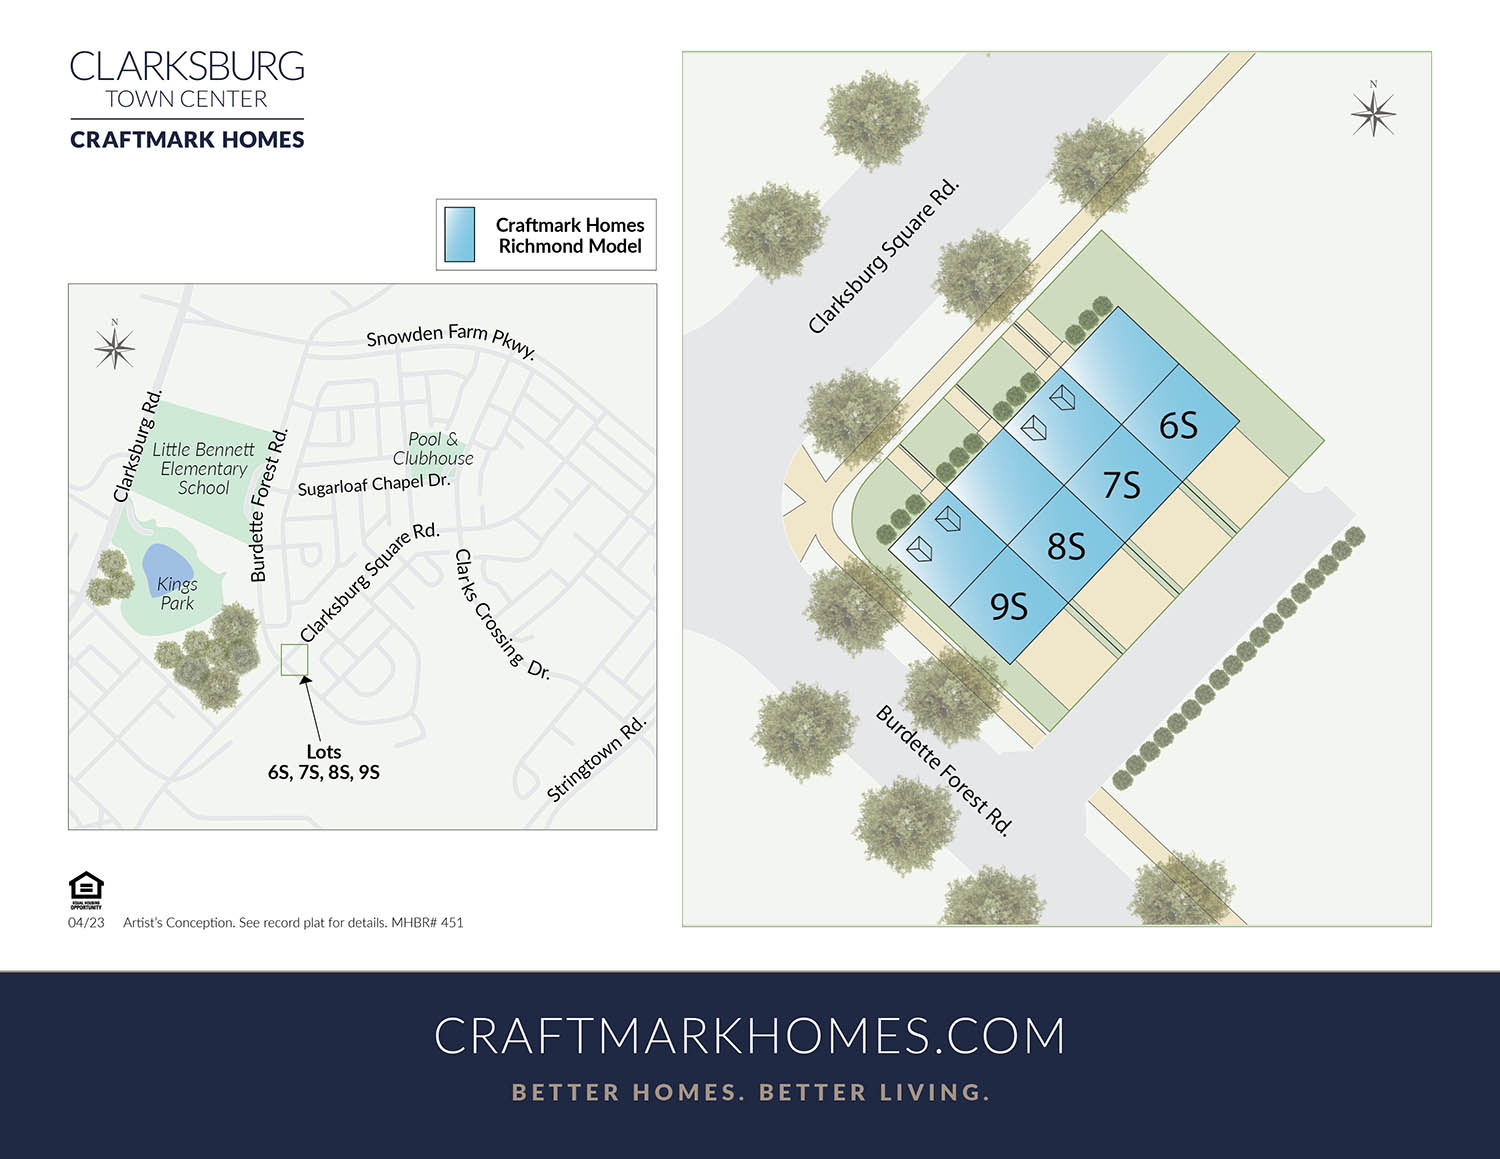 Clarksburg Town Center Site Plan, Craftmark Homes